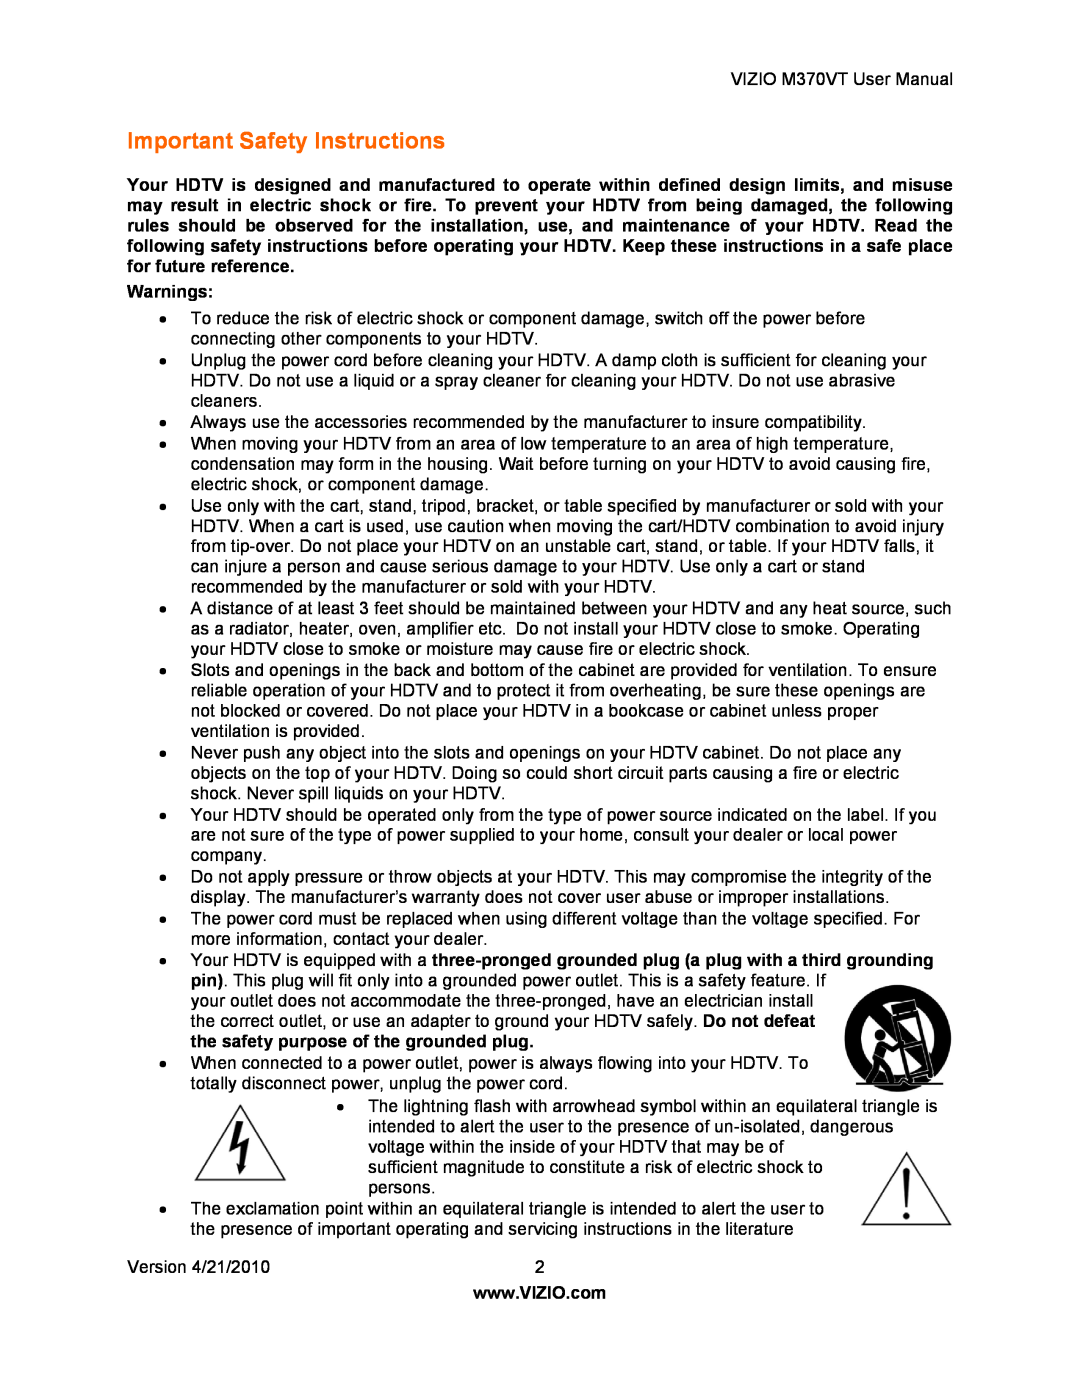 Vizio M370VT manual Important Safety Instructions 